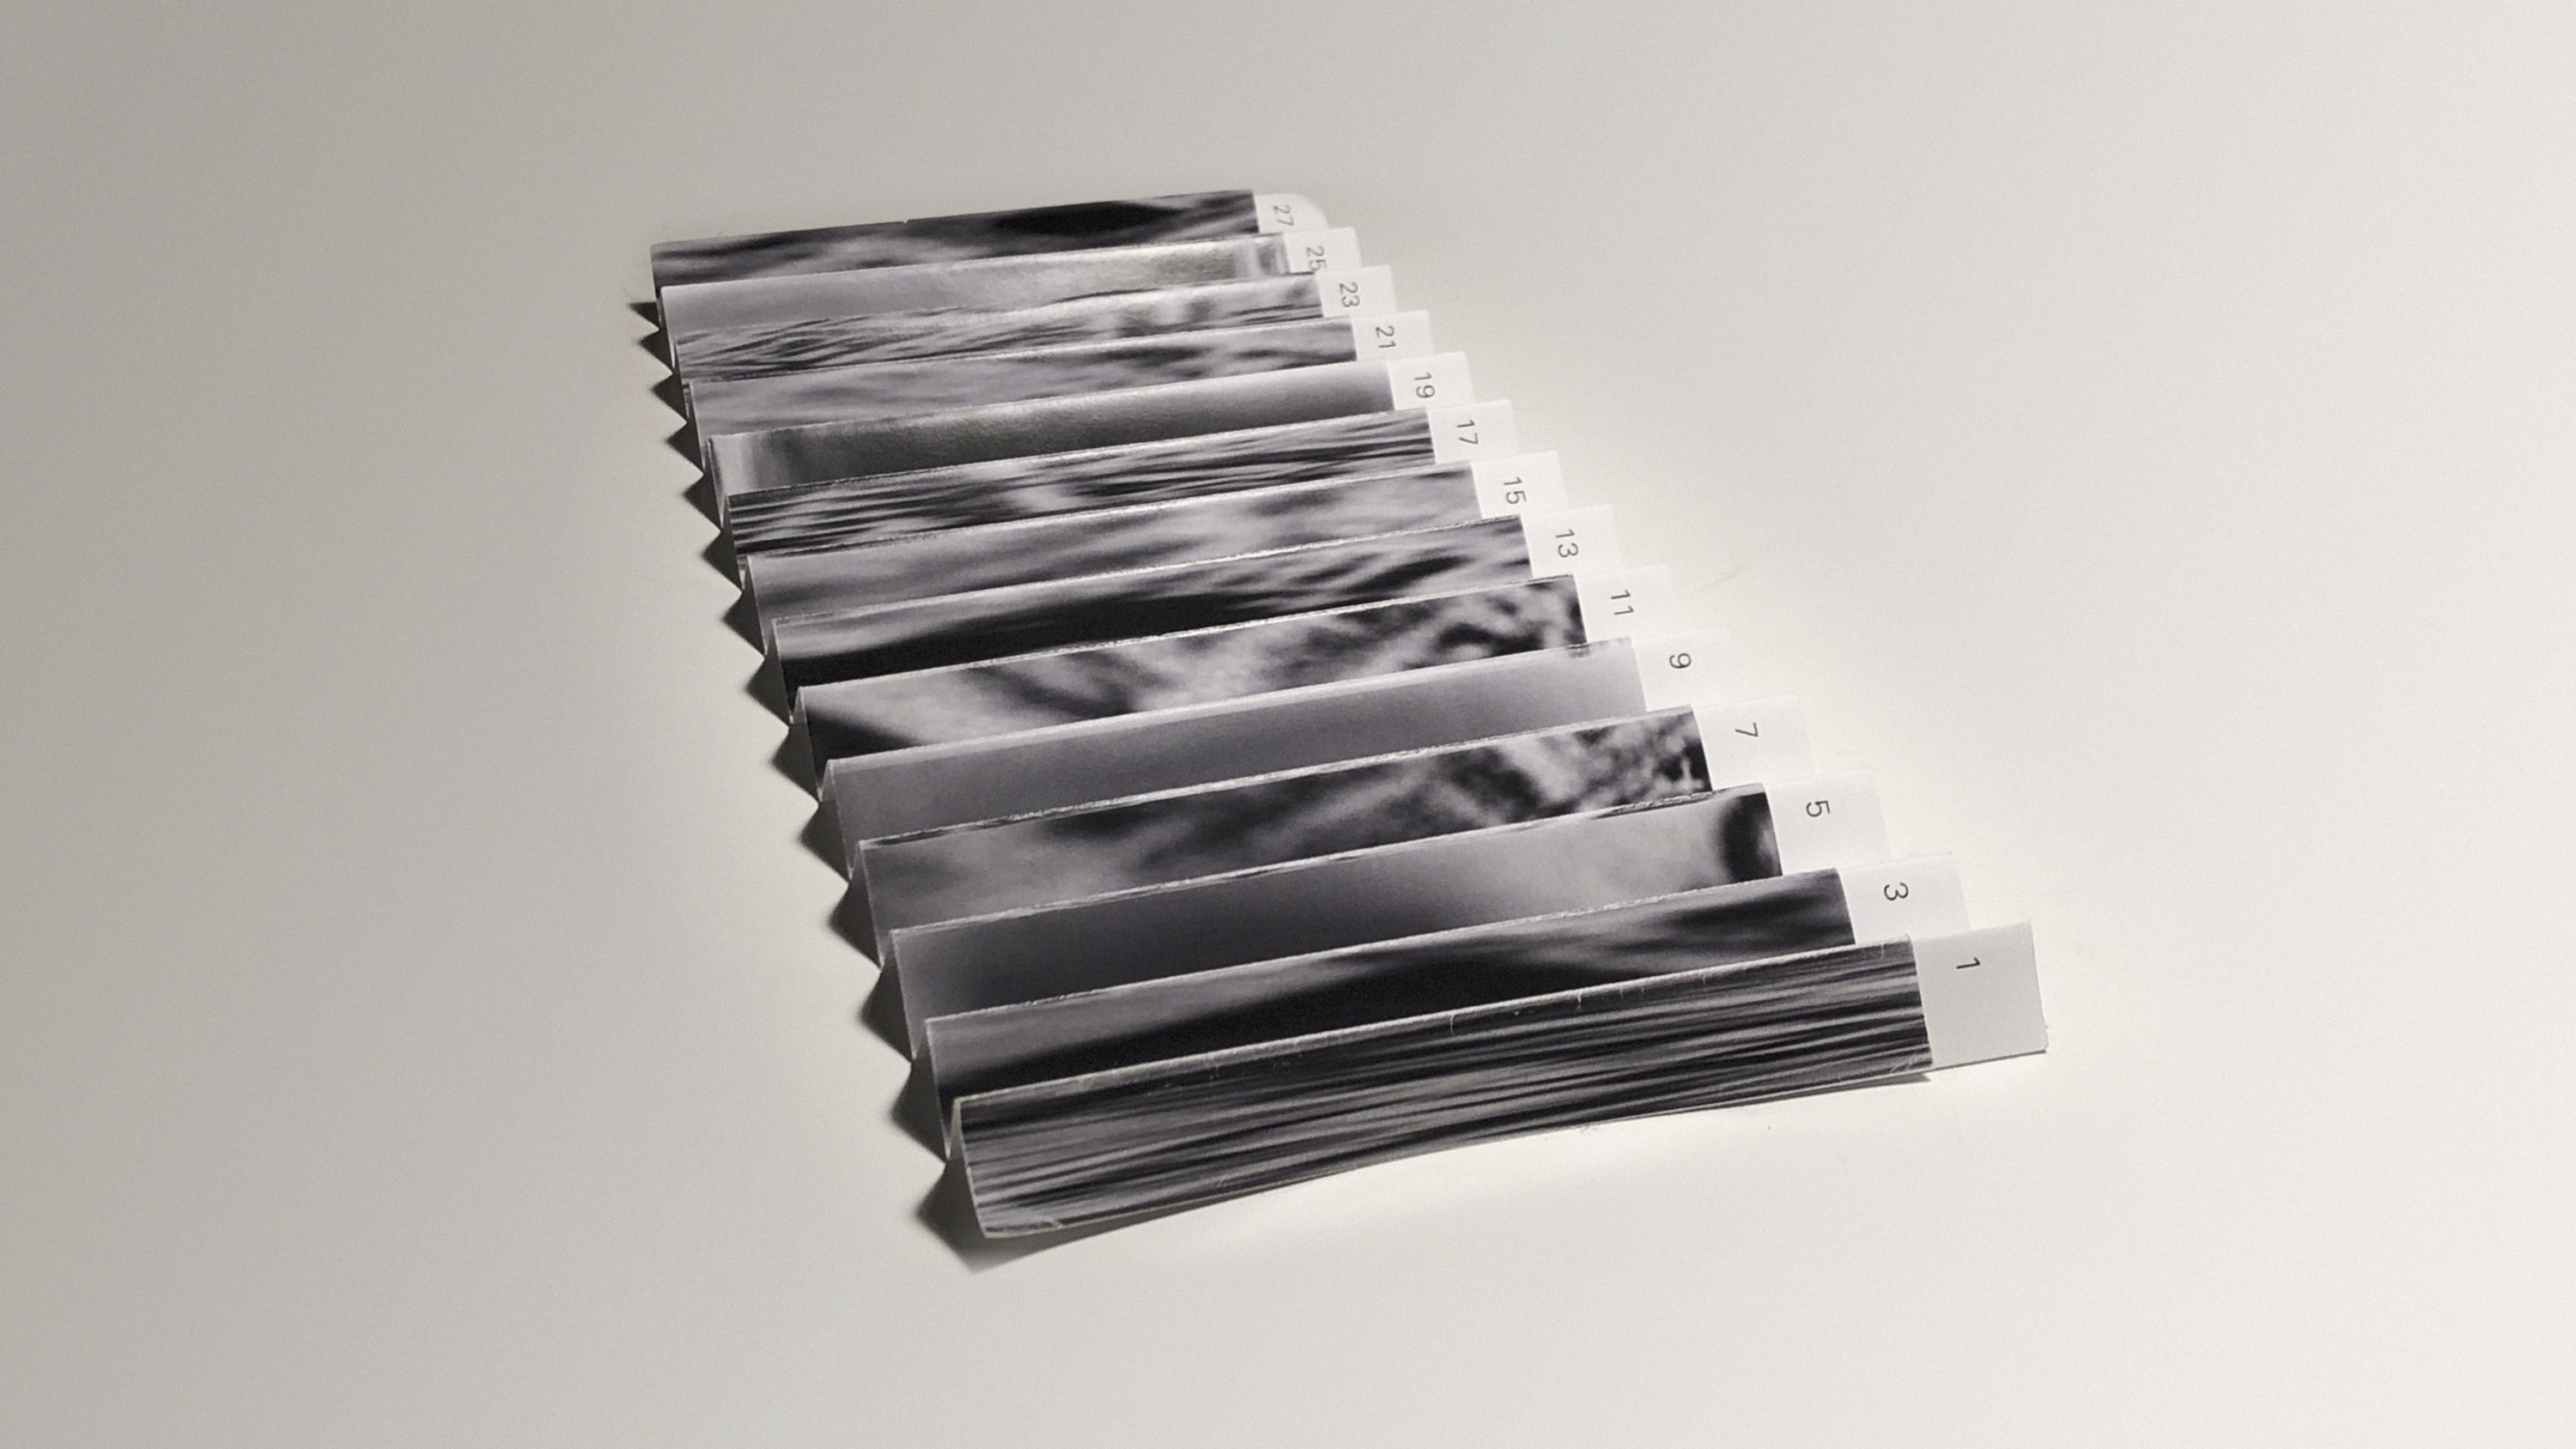 Satellite slices stretched into rectangles, printed as folding leporello